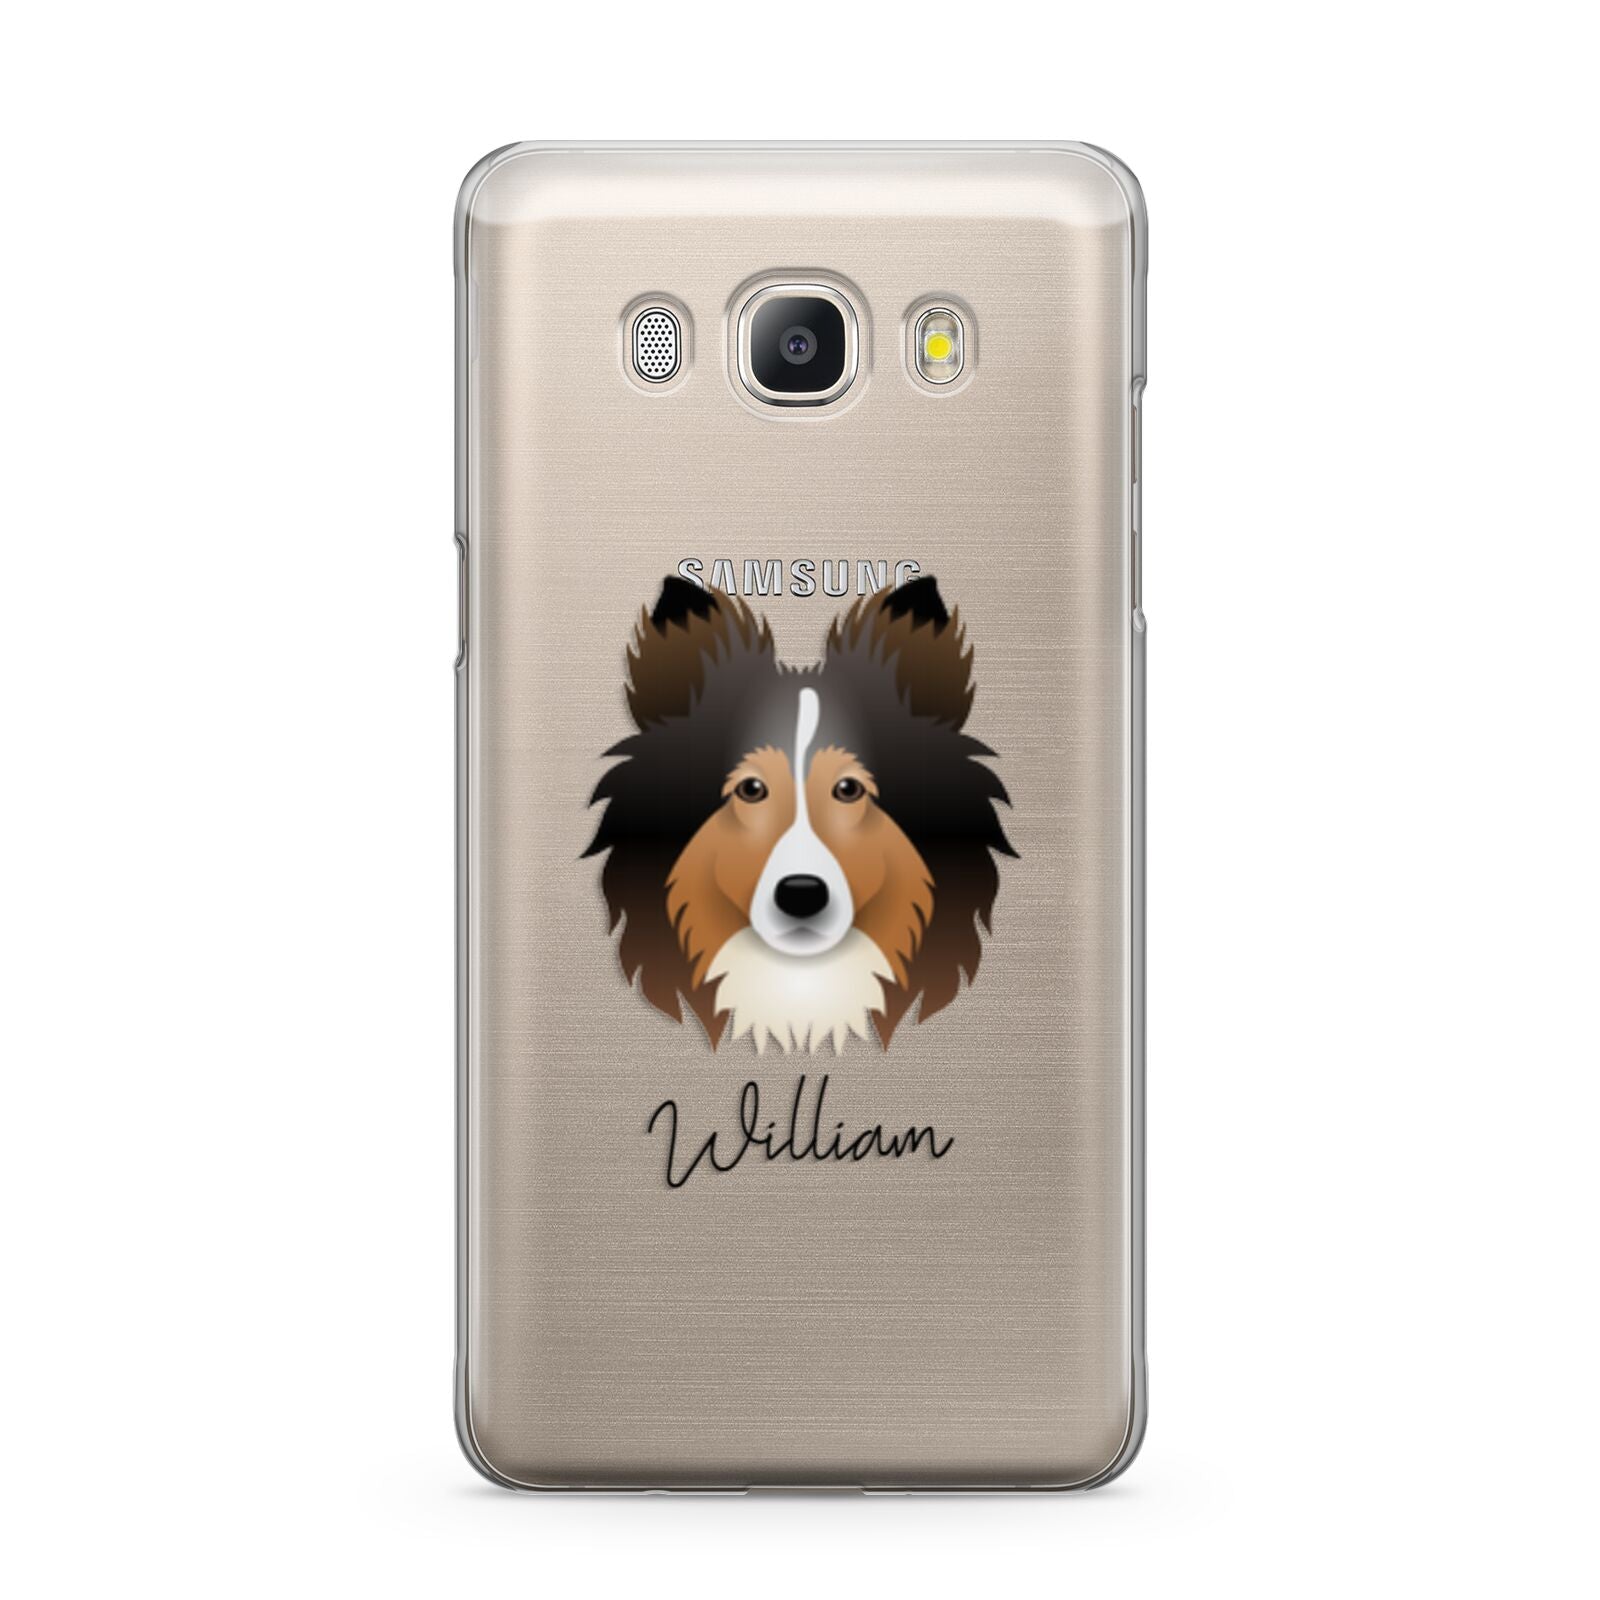 Shetland Sheepdog Personalised Samsung Galaxy J5 2016 Case